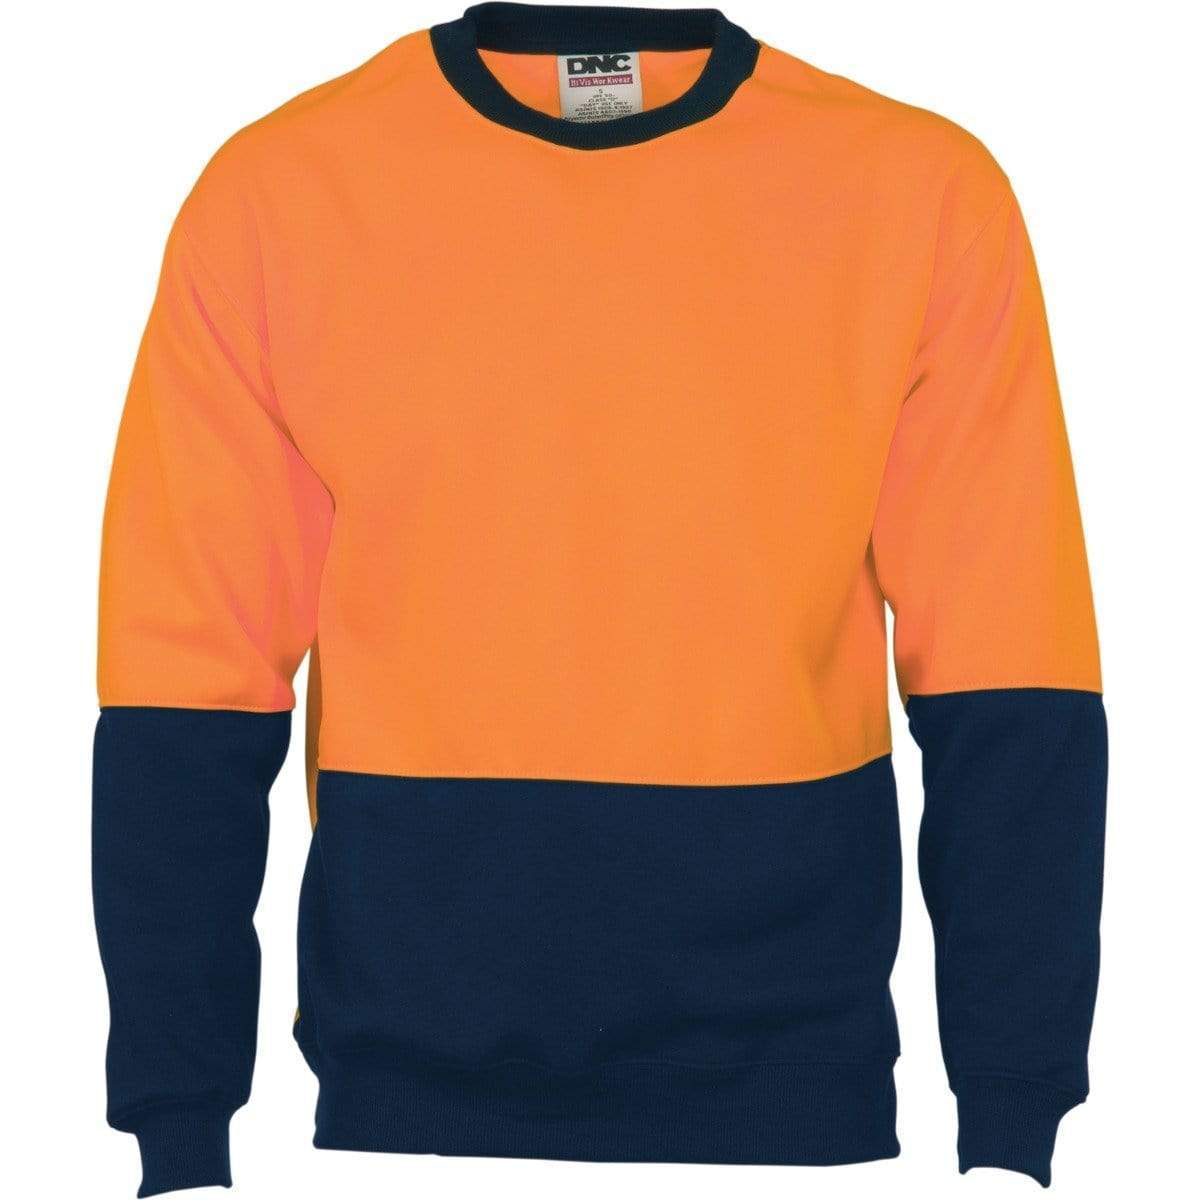 Dnc Workwear Hi-vis Two-tone Fleecy Crew-neck Sweatshirt (Sloppy Joe) - 3821 Work Wear DNC Workwear Orange/Navy XS 